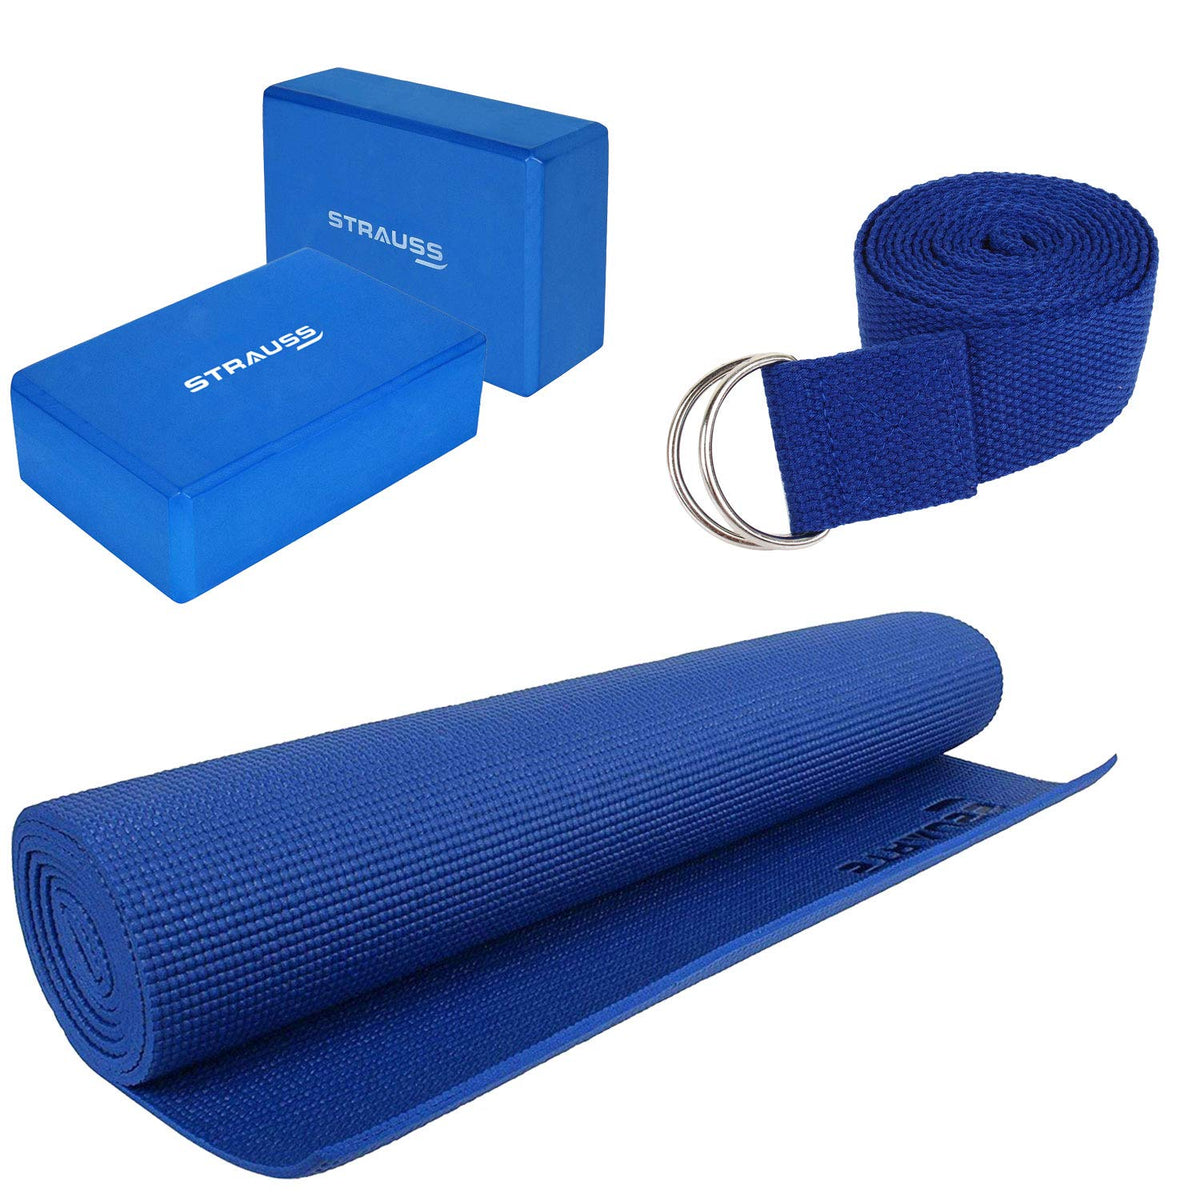 Strauss Yoga Mat 6mm (Blue), Yoga Block (Navy Blue) Pair and Yoga Belt (Blue)